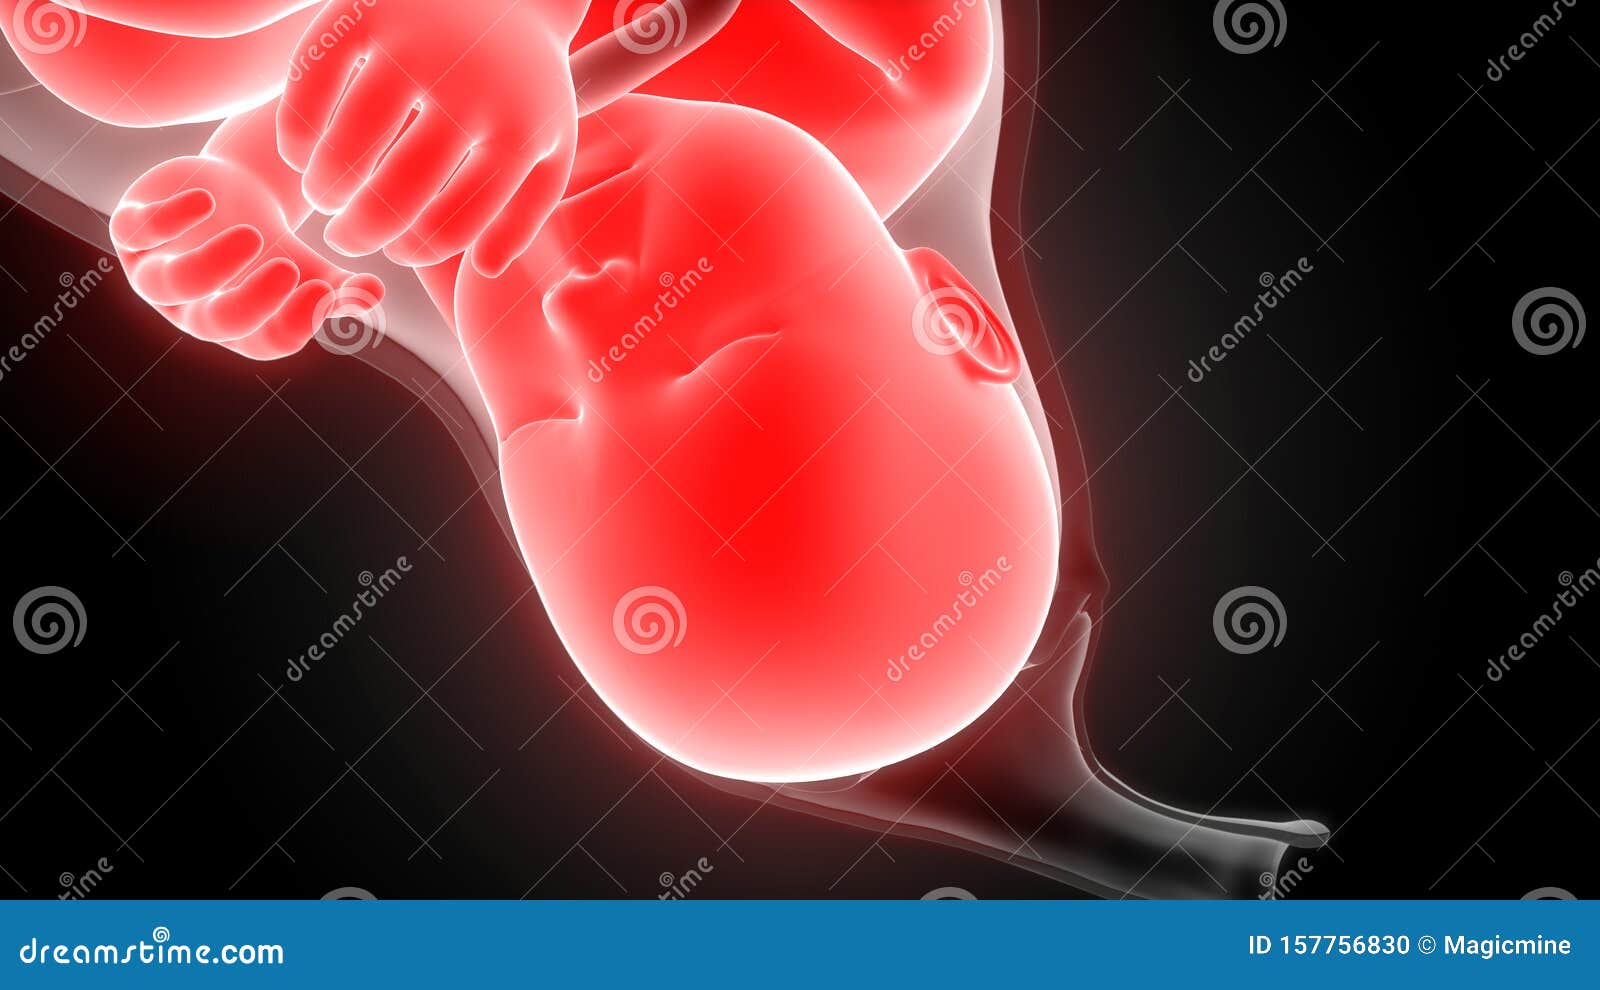 Fetus Baby in Womb Anatomy stock illustration ...